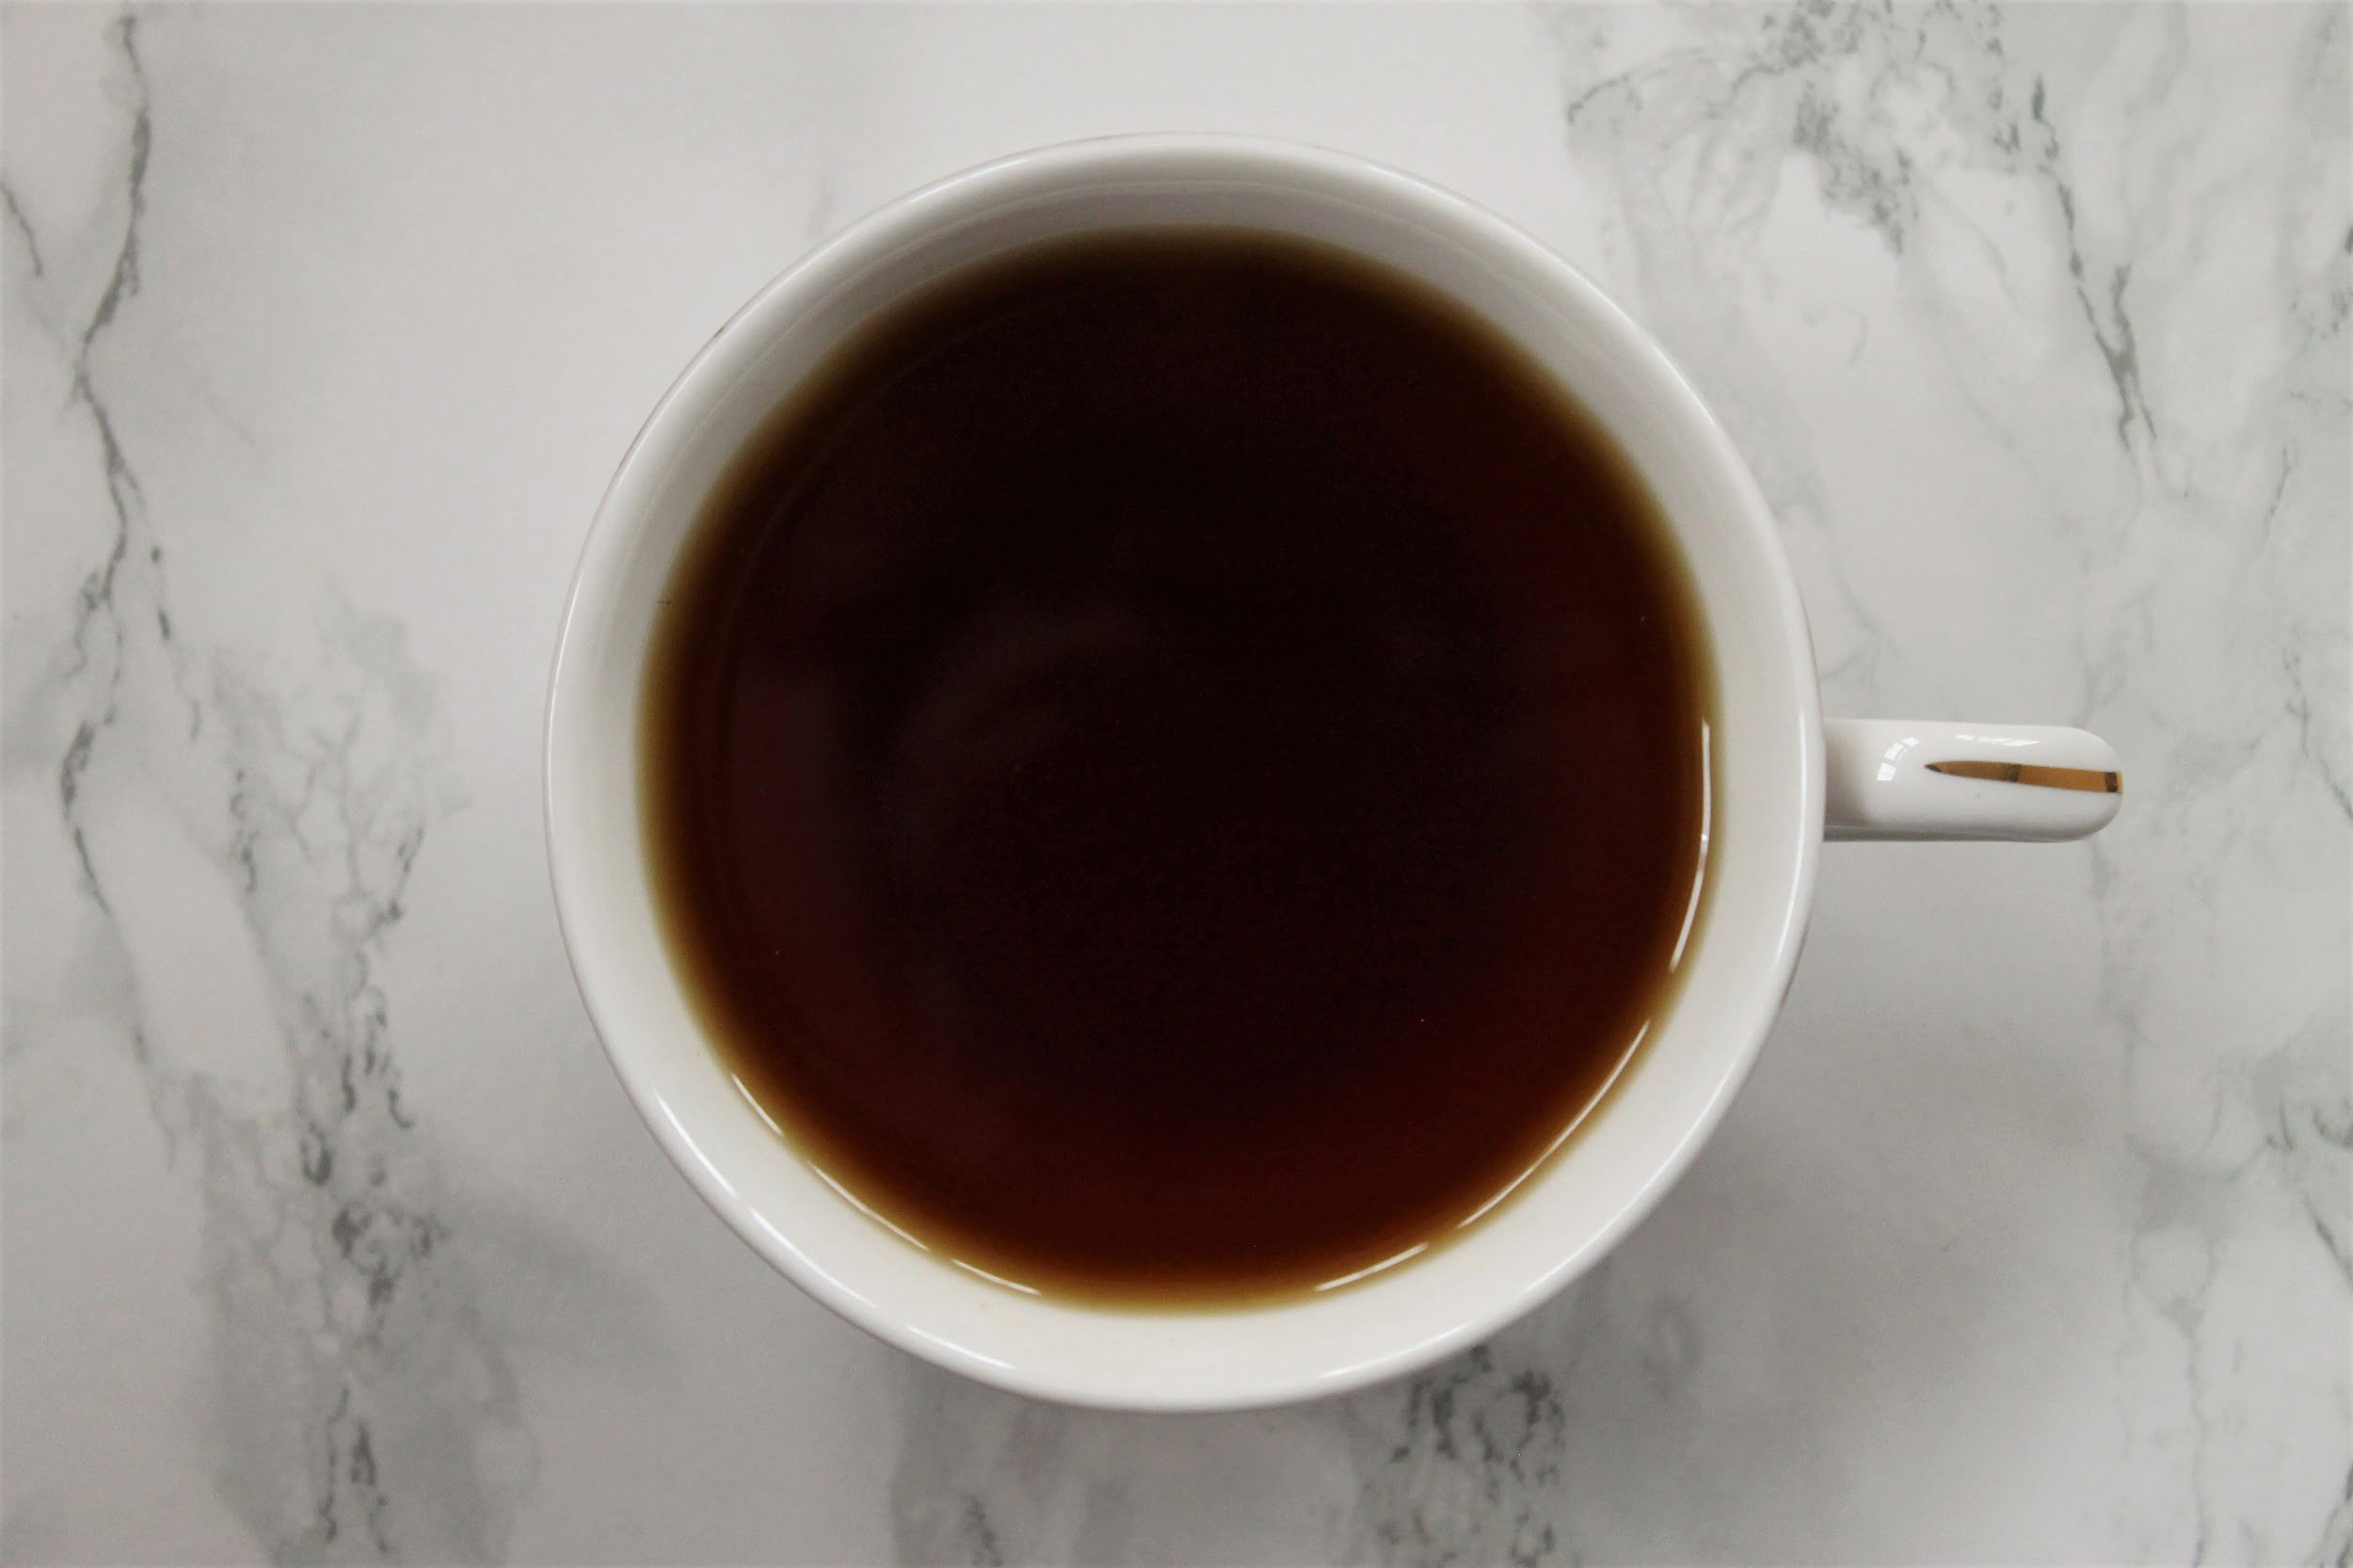 mlesna ceylon black tea in teacup from above